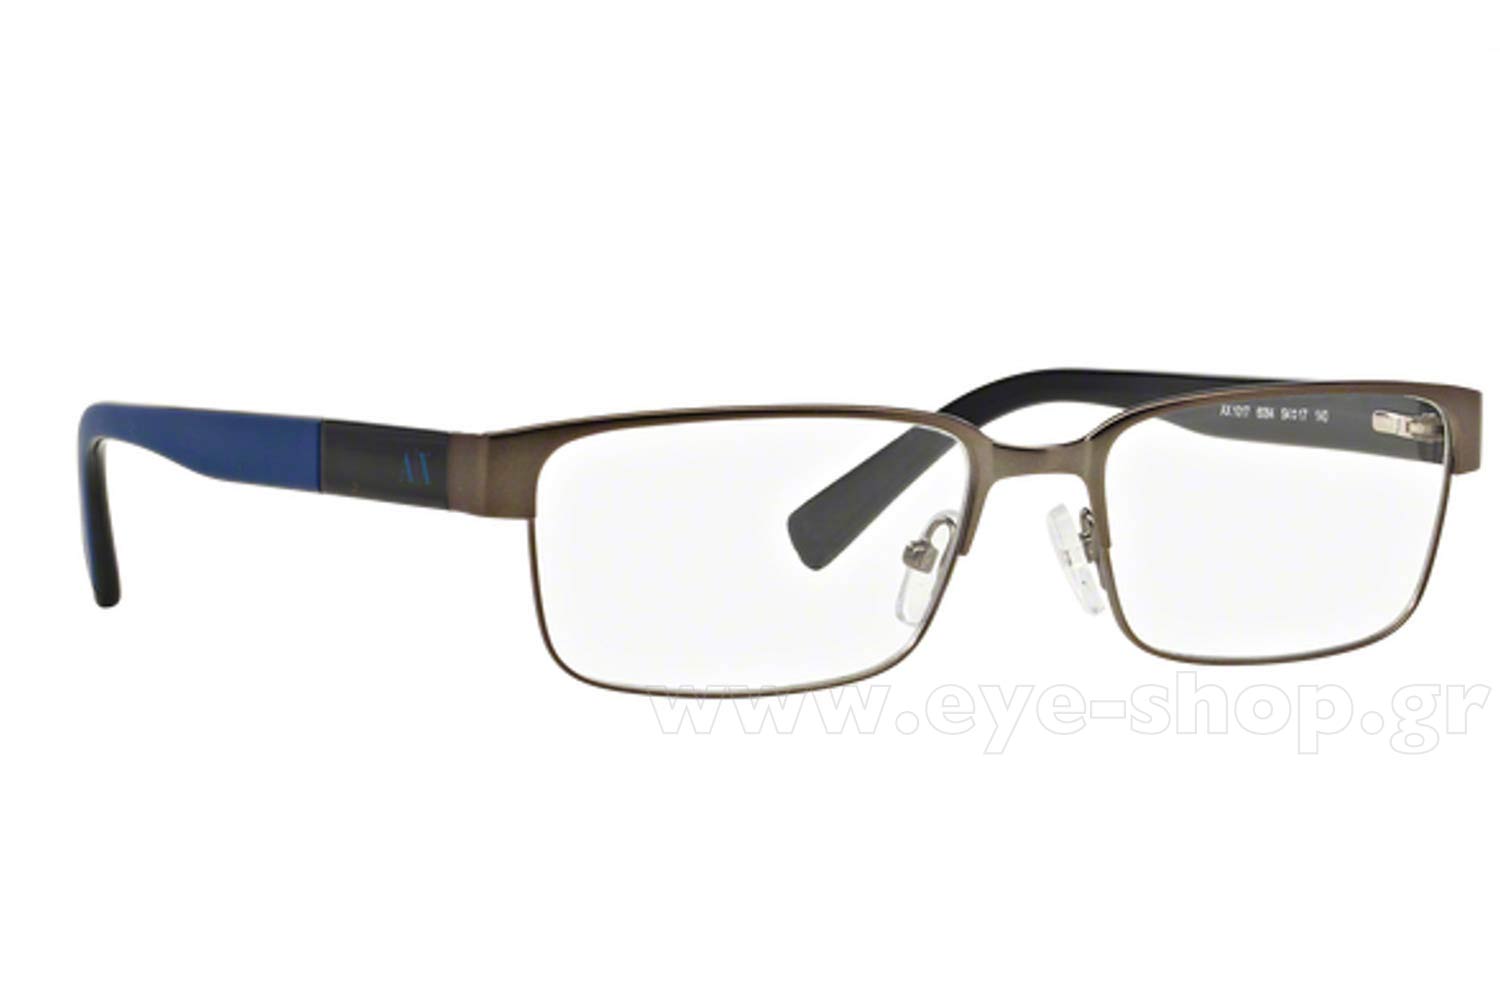 armani exchange blue glasses